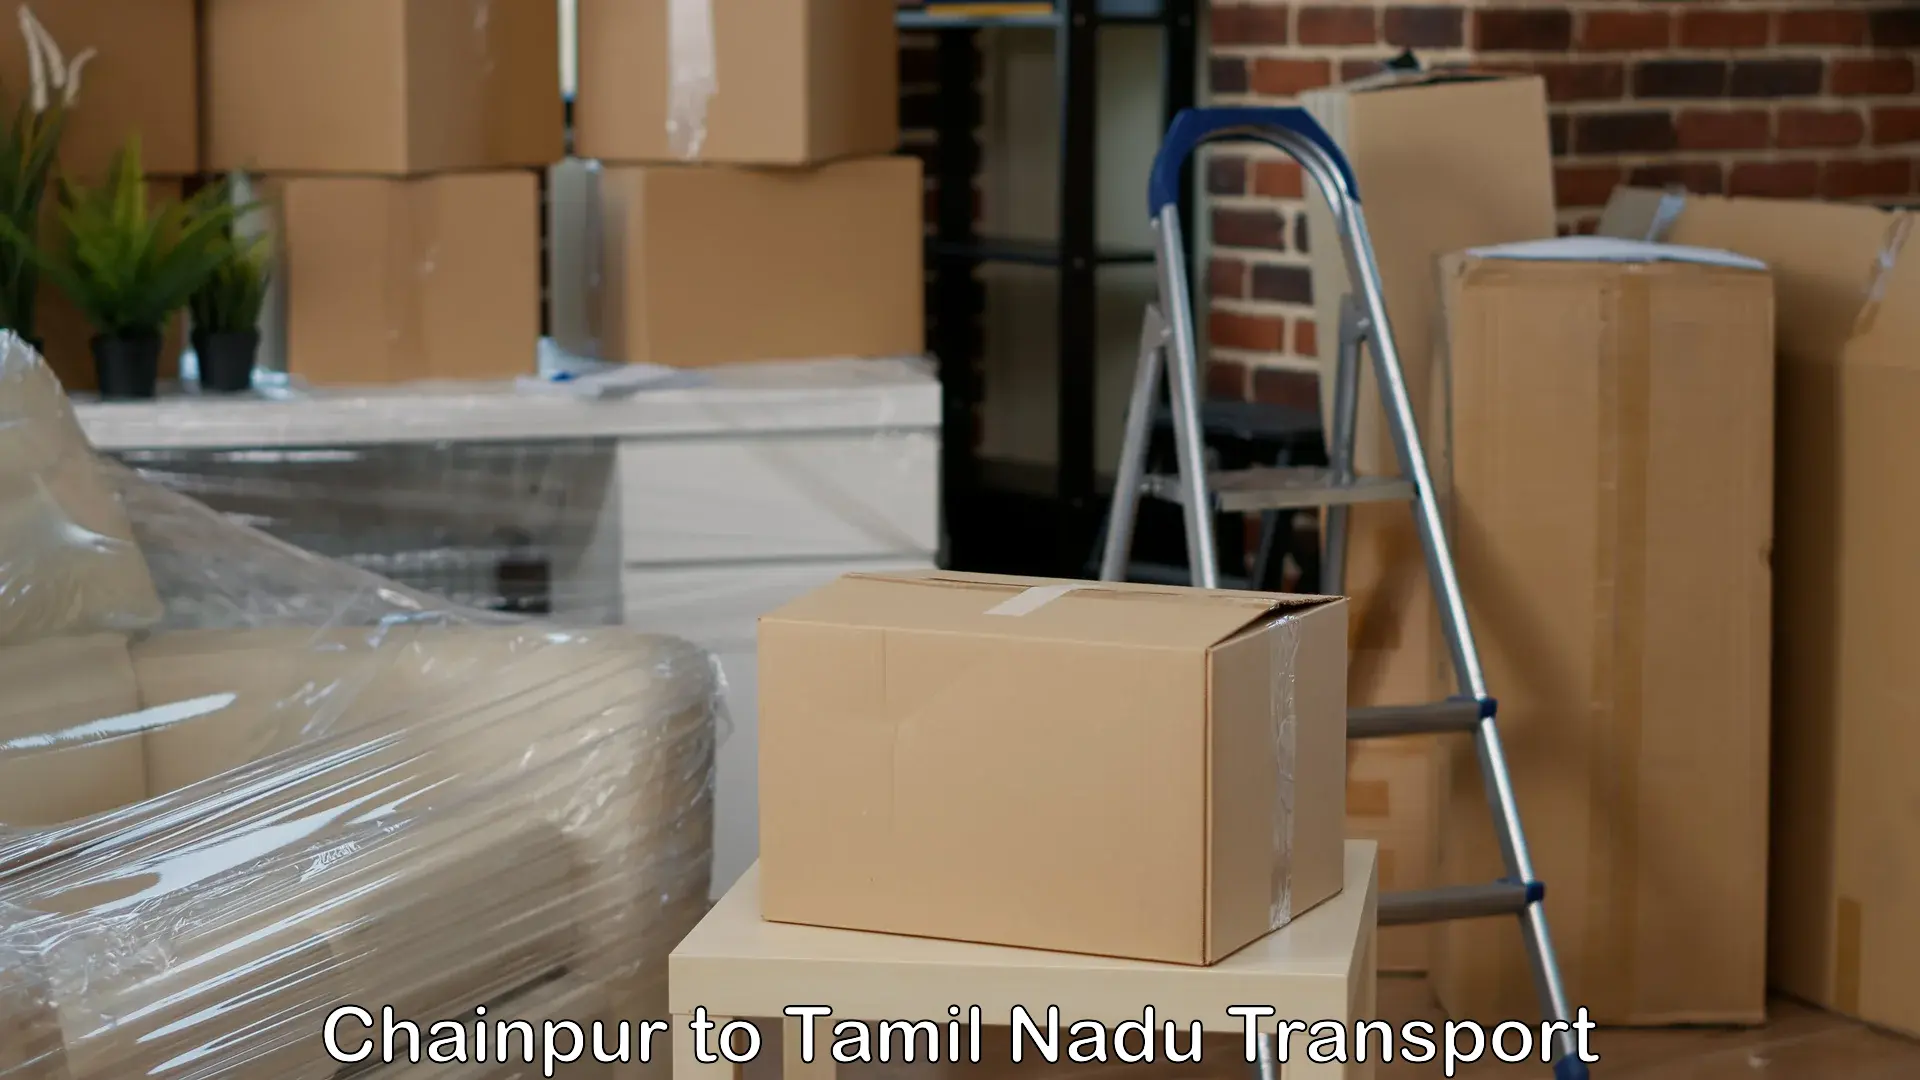 Container transport service Chainpur to Tirunelveli